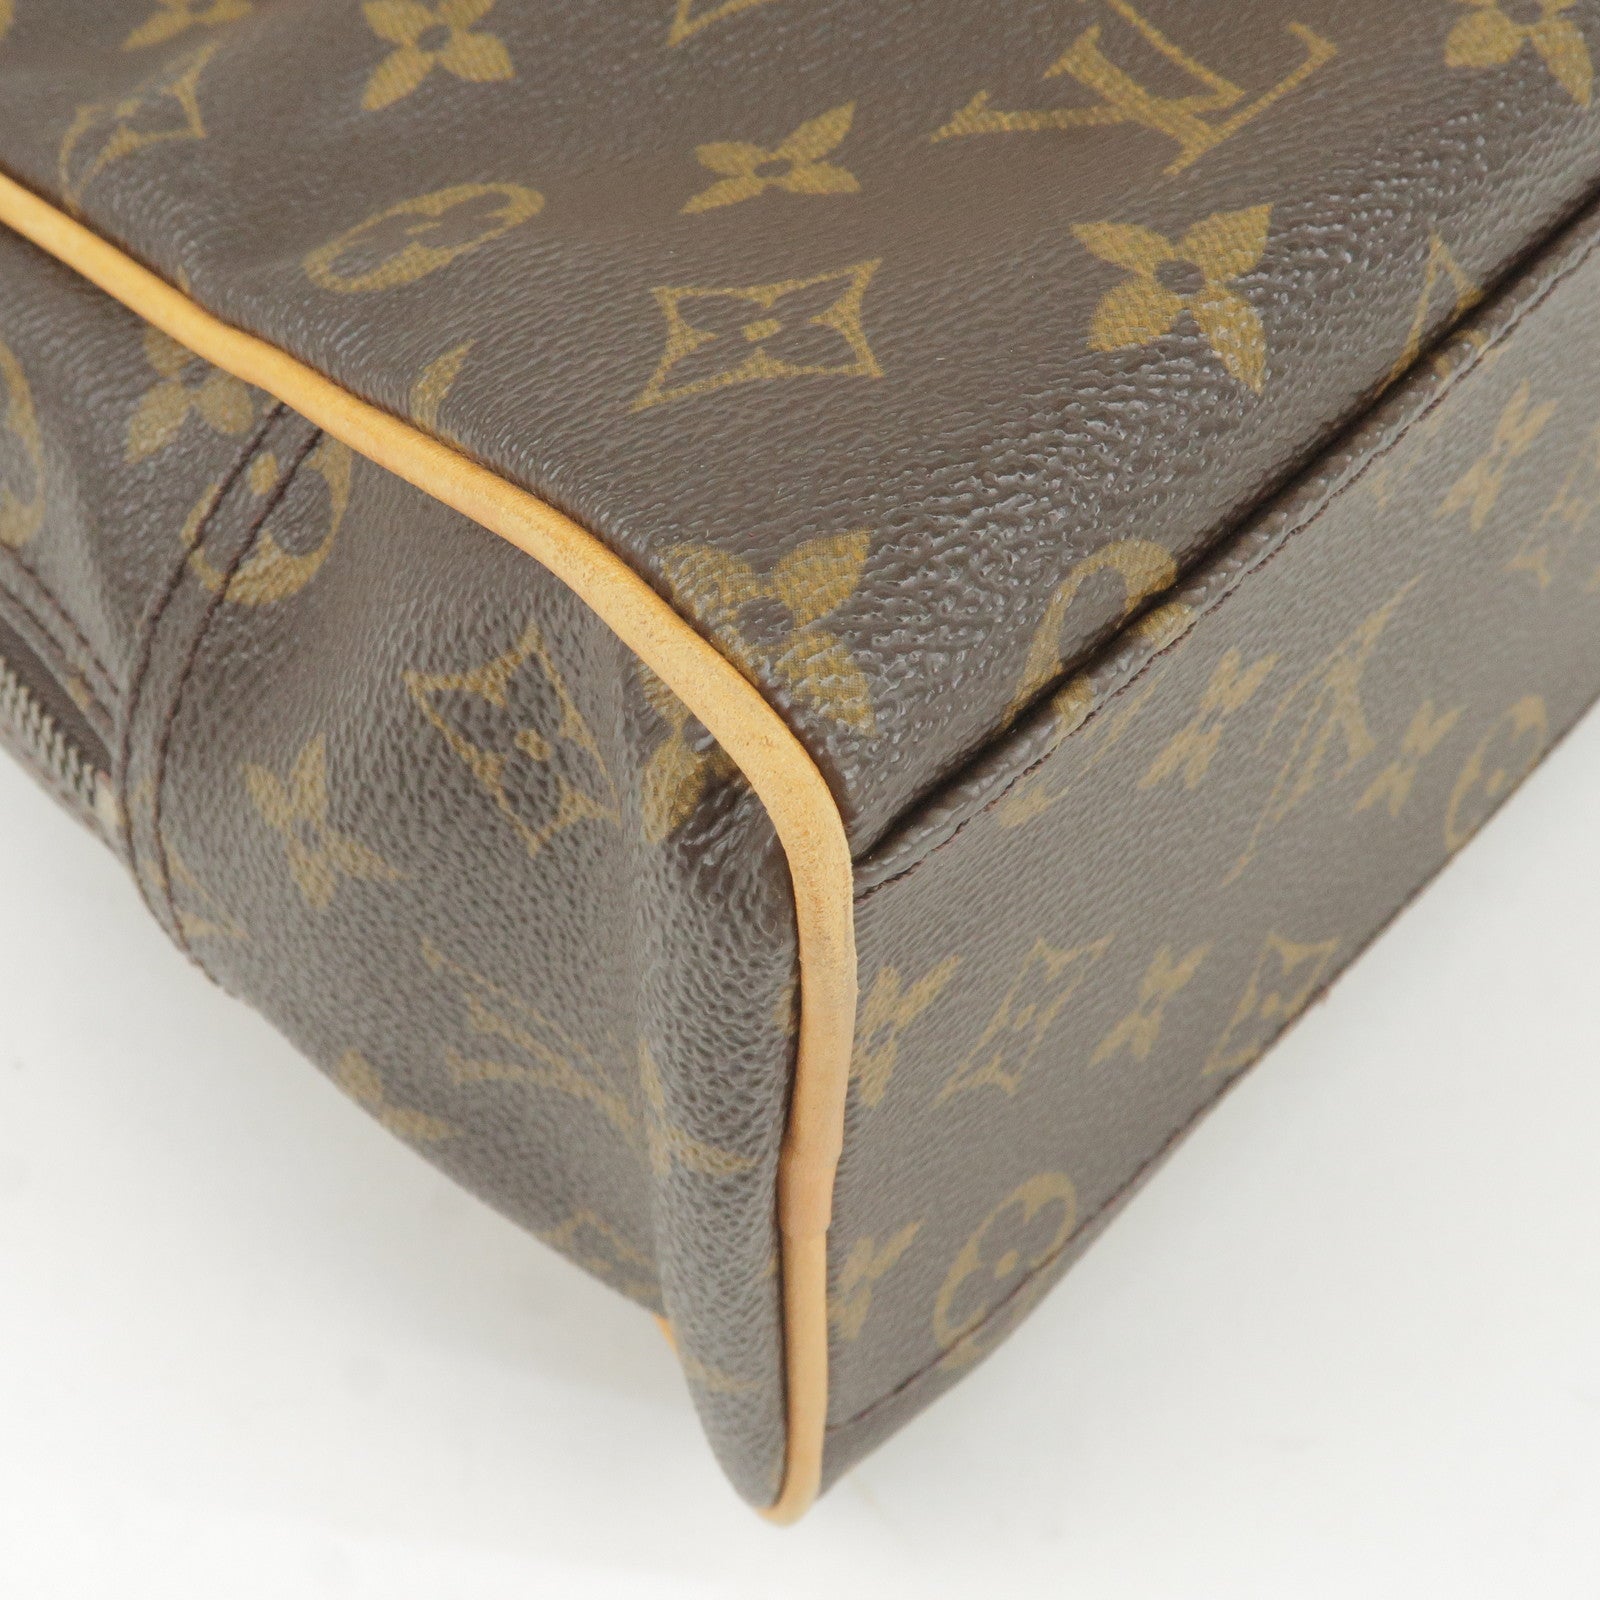 Louis Vuitton Manhattan PM M40026 Monogram Canvas Handbag Brown